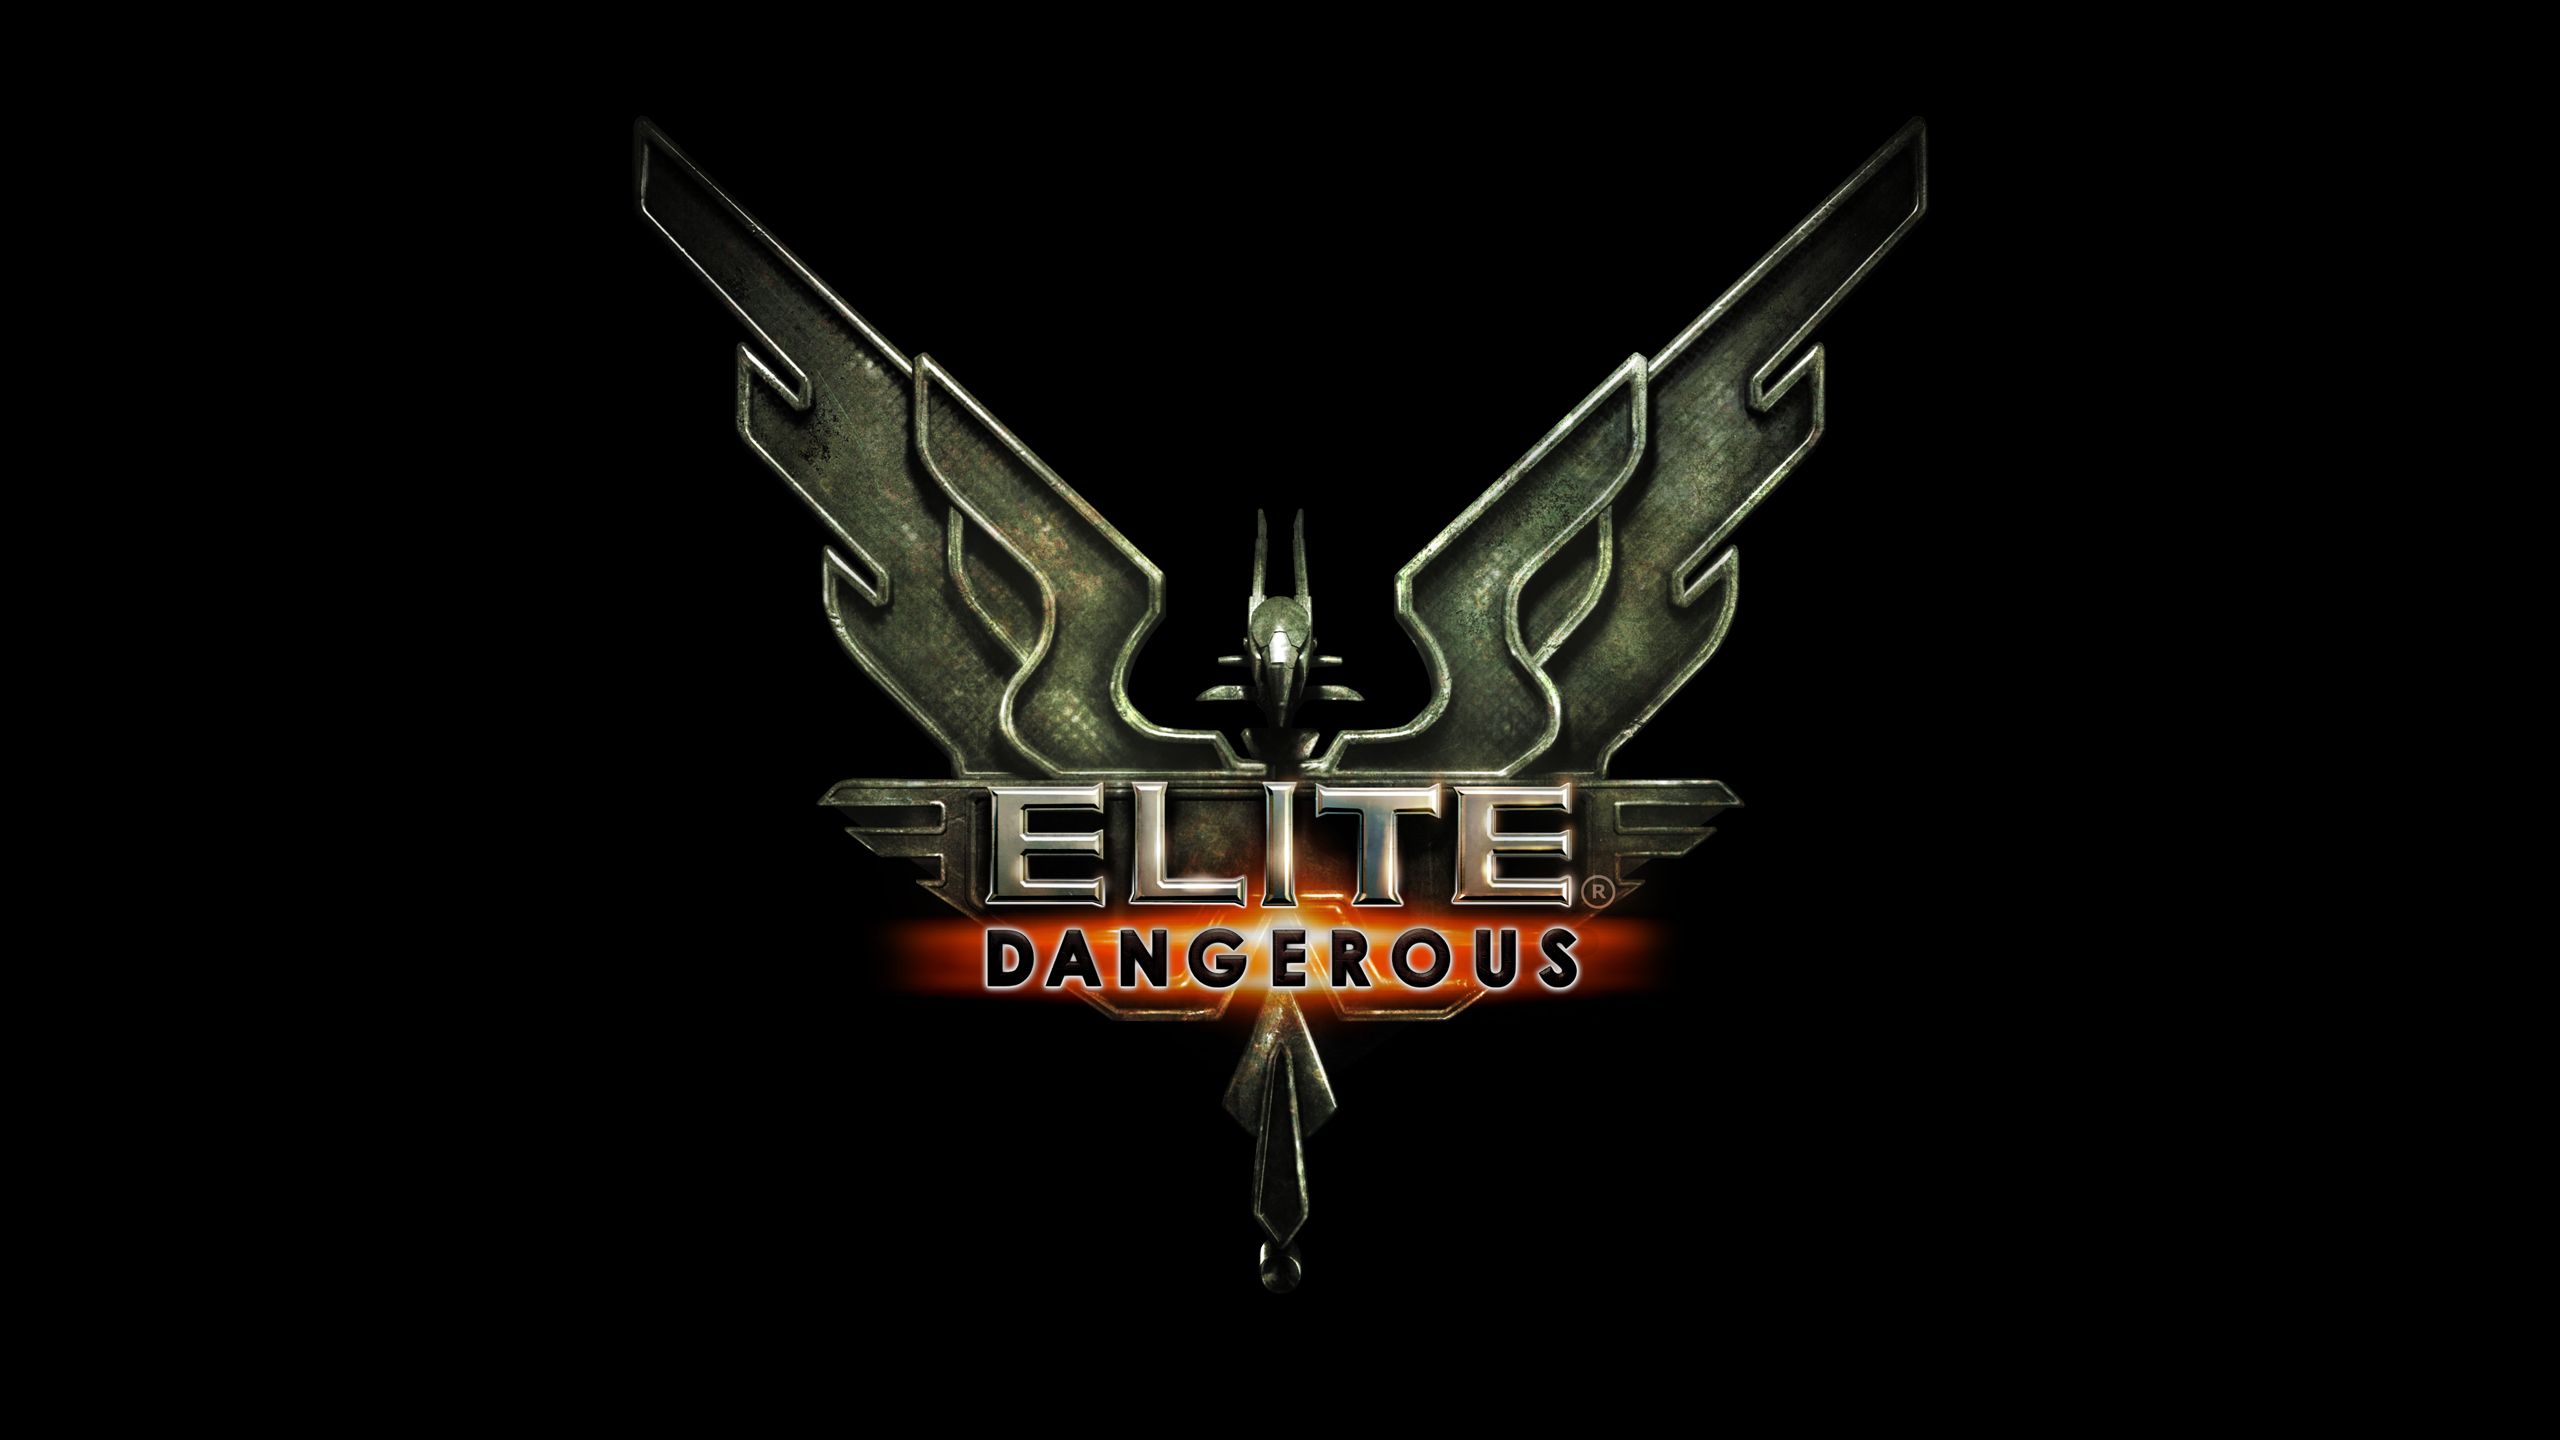 Elite: Dangerous Background, Picture, Image